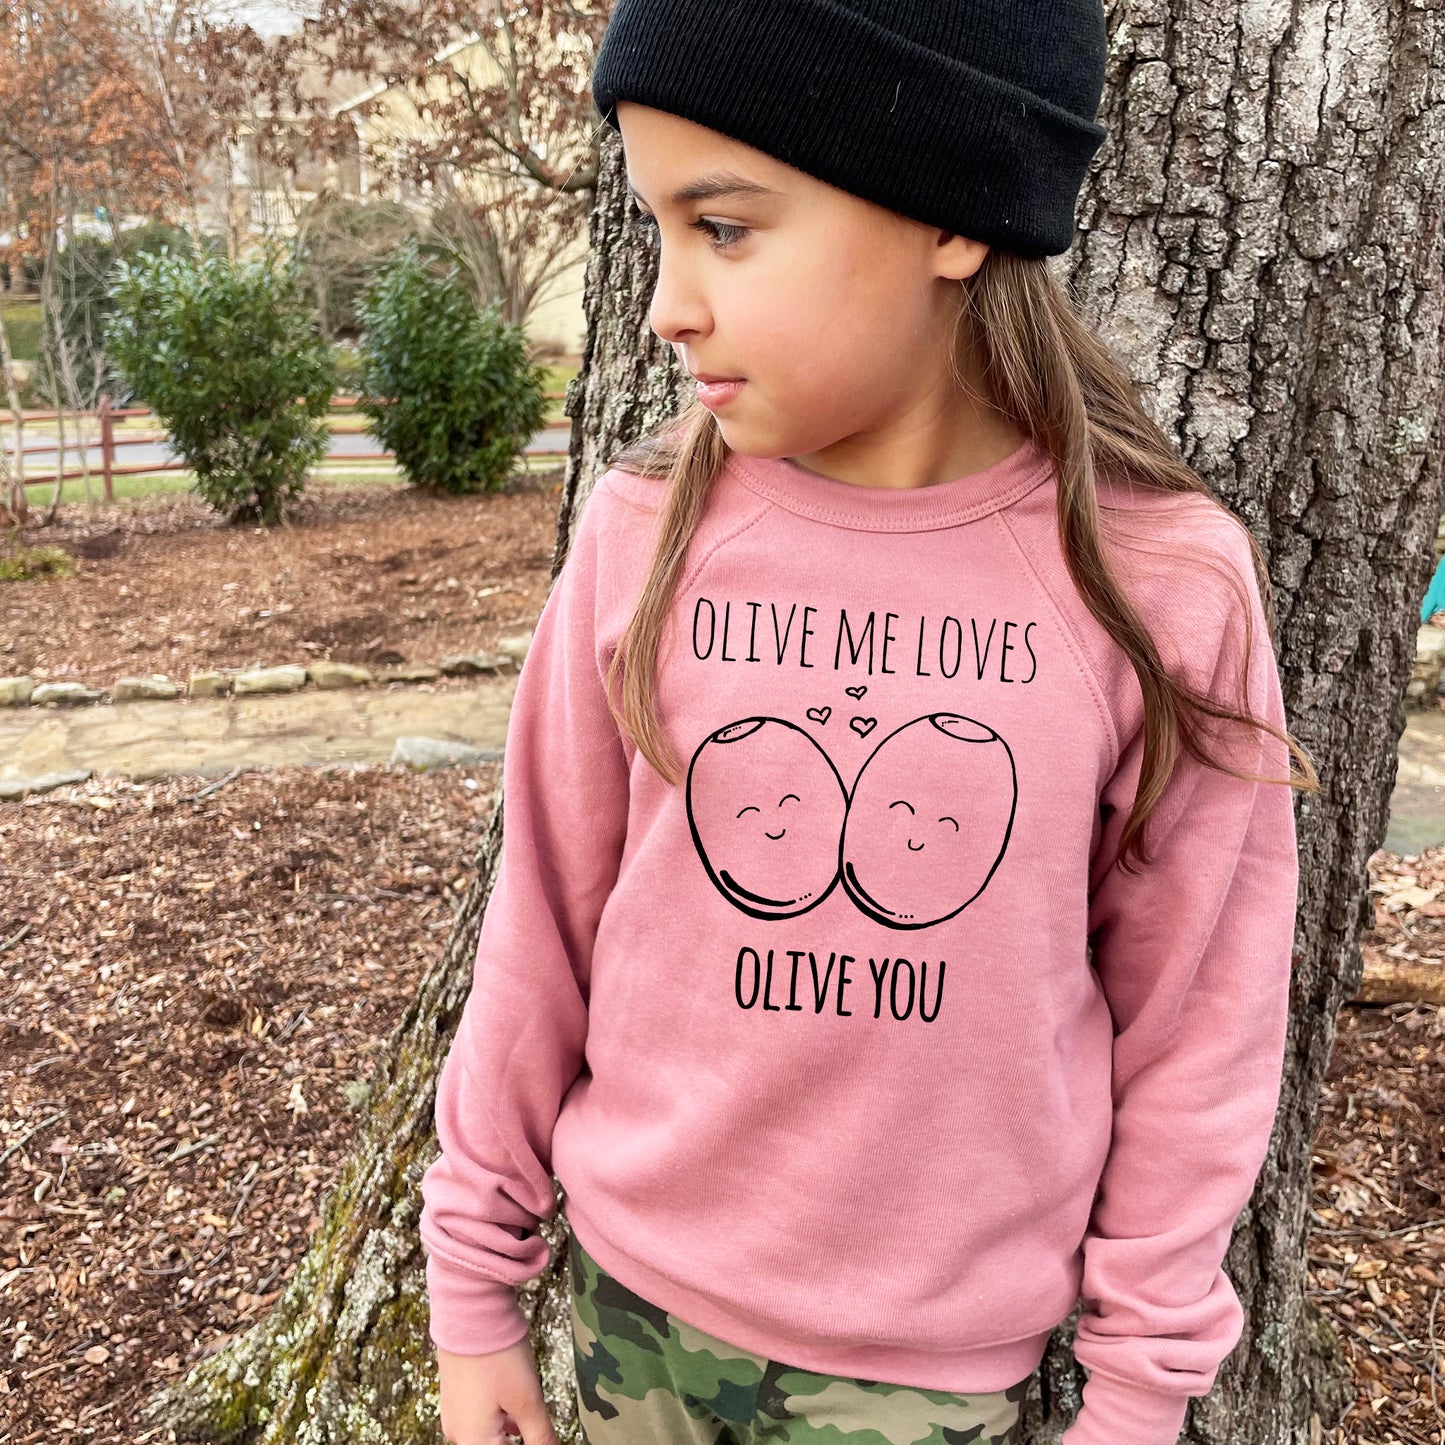 Olive Me Loves Olive You - Kid's Sweatshirt - Heather Gray or Mauve